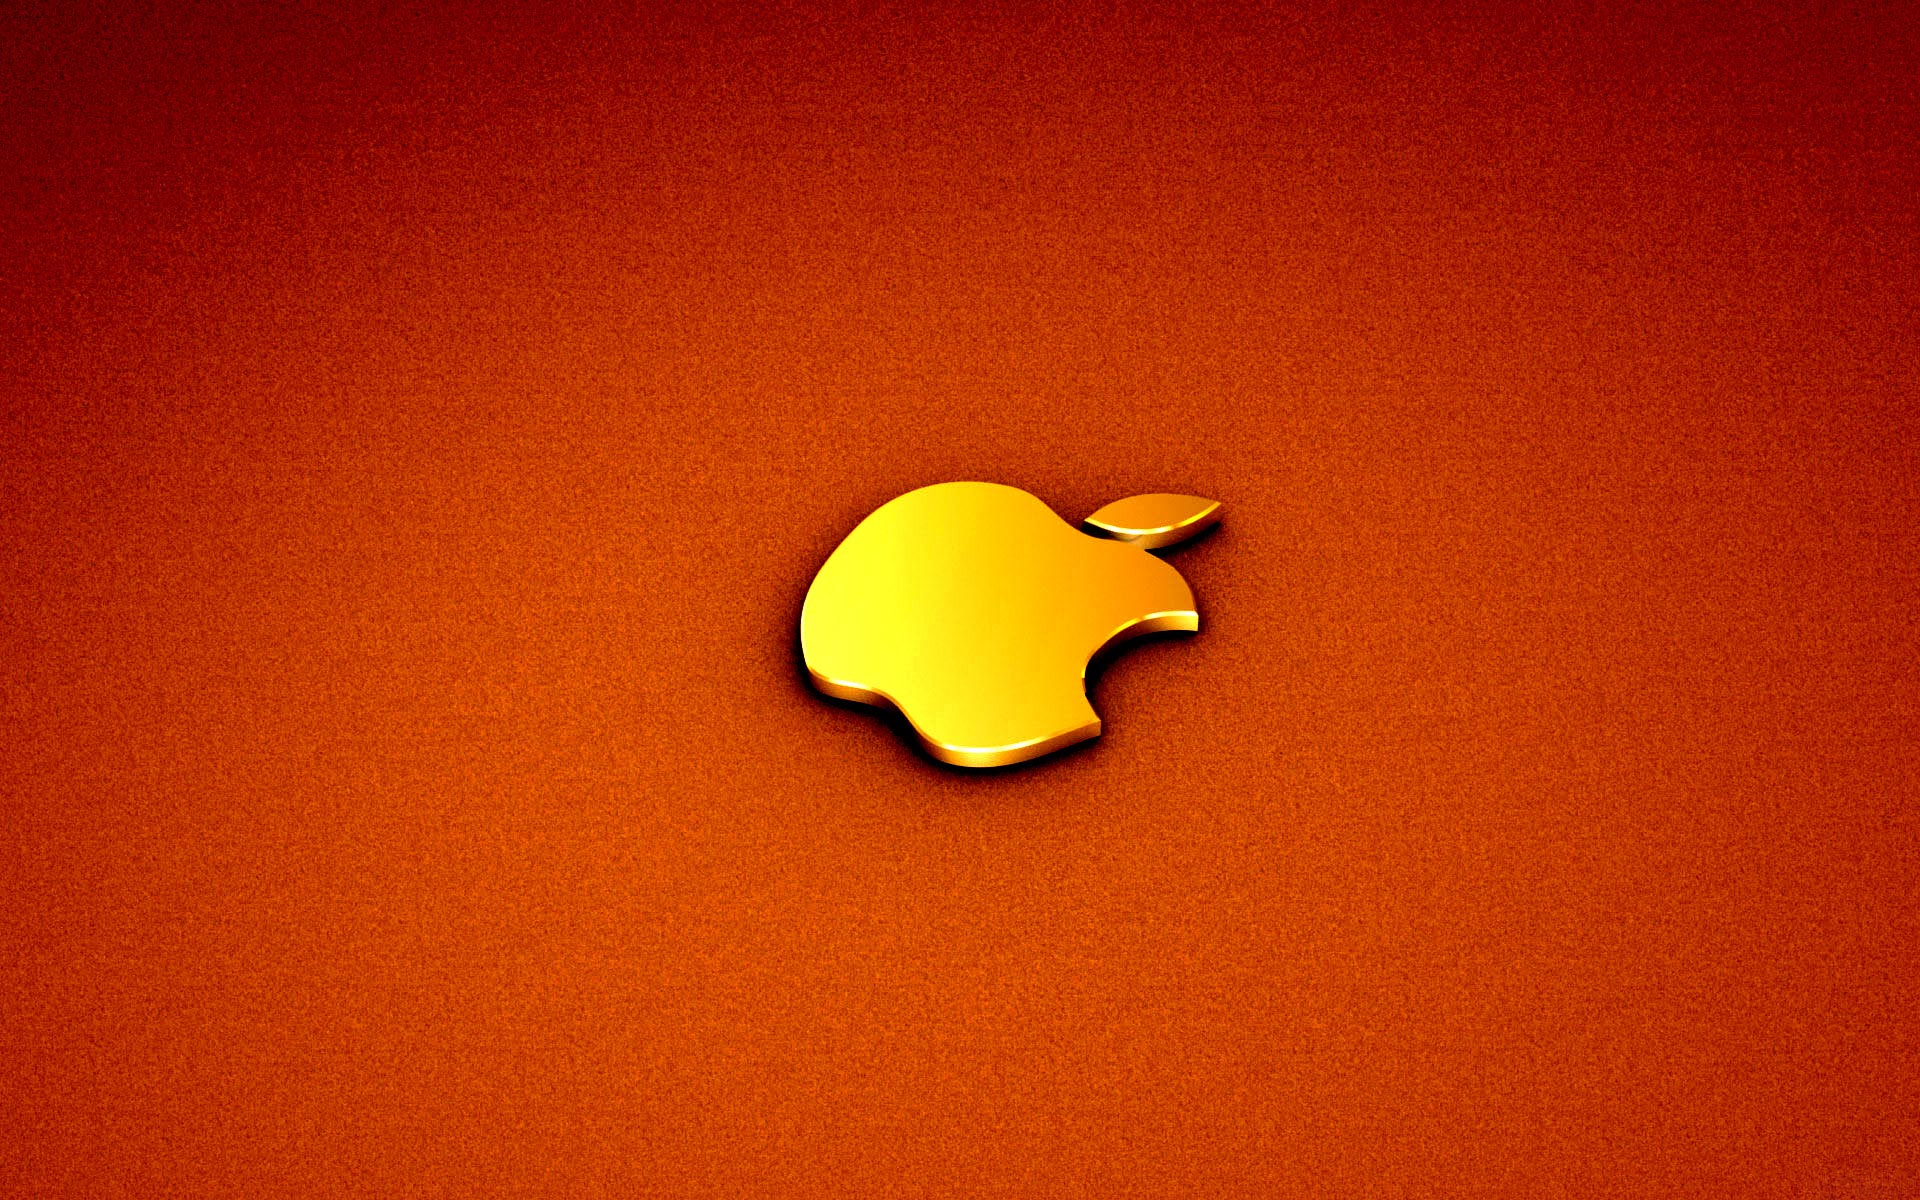 Apple Macbook Pro Image Wallpaper High Quality